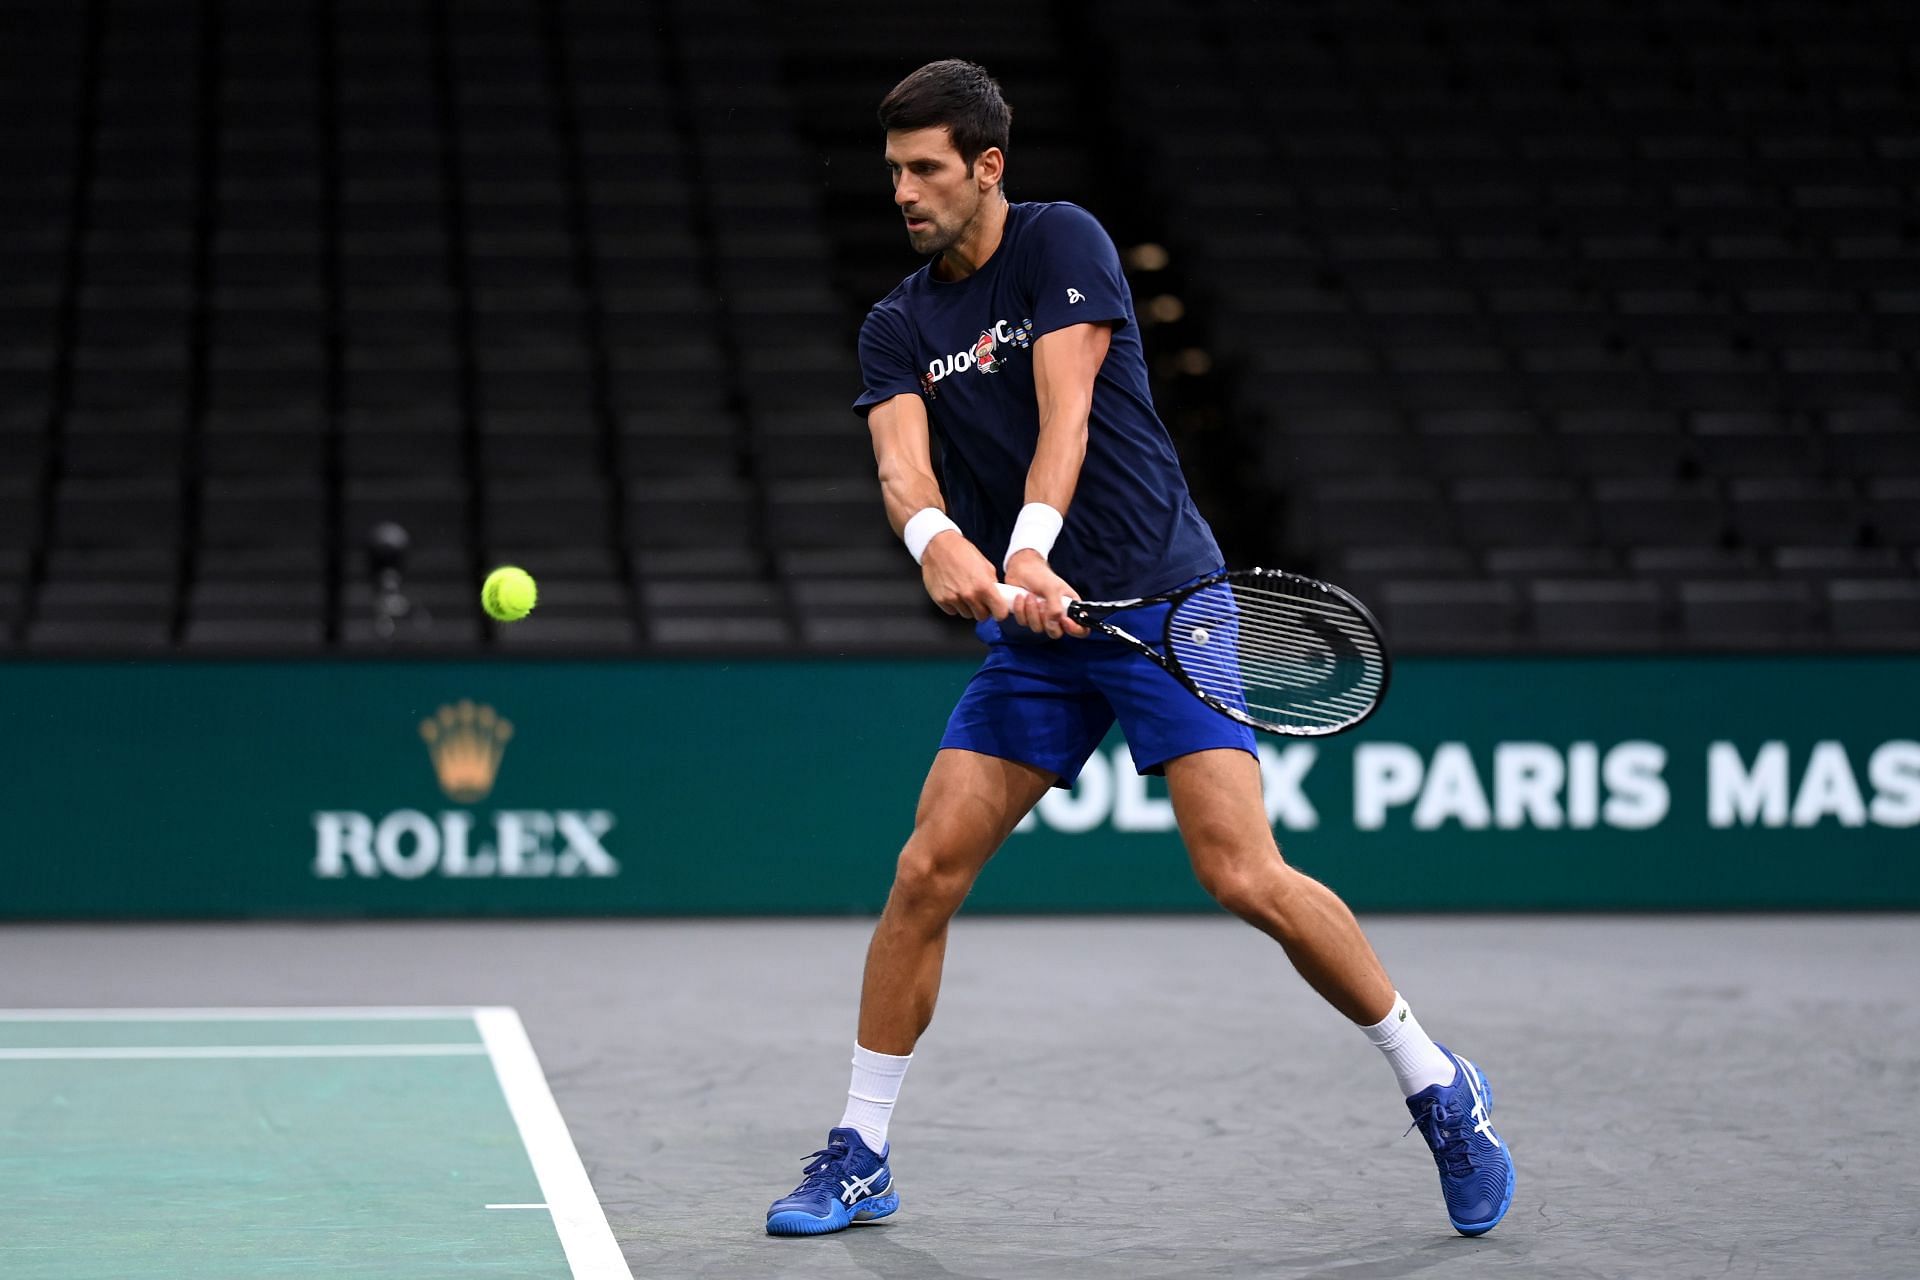 Novak Djokovic training ahead of the 2021 Rolex Paris Masters